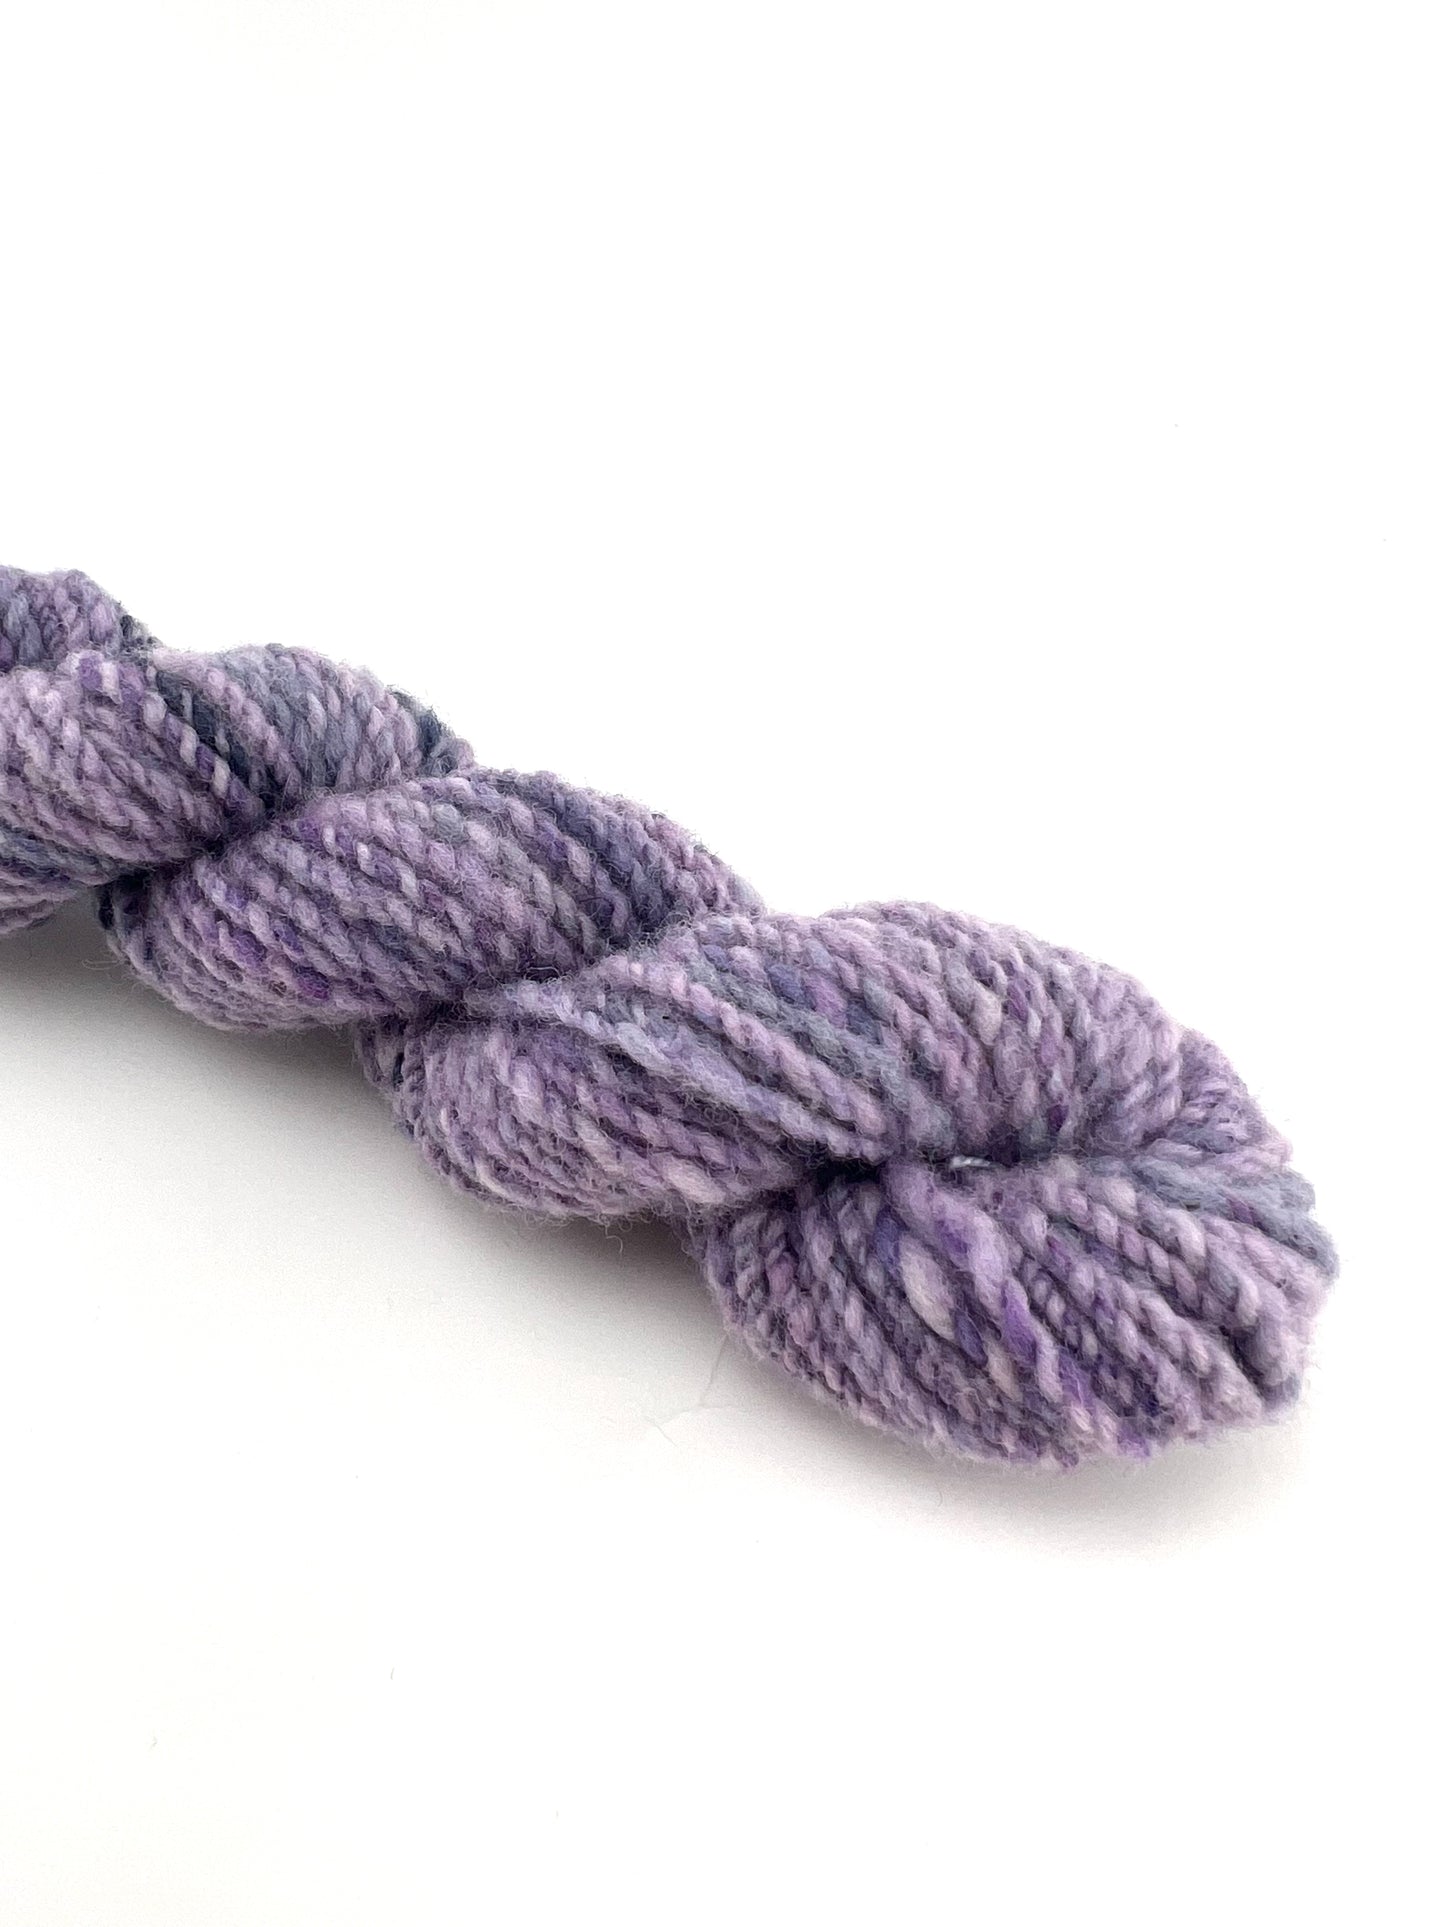 Hand Spun Mini Skein Hand Dyed Fibre Purples Artsy Yarn Alberta Targhee Made in Canada